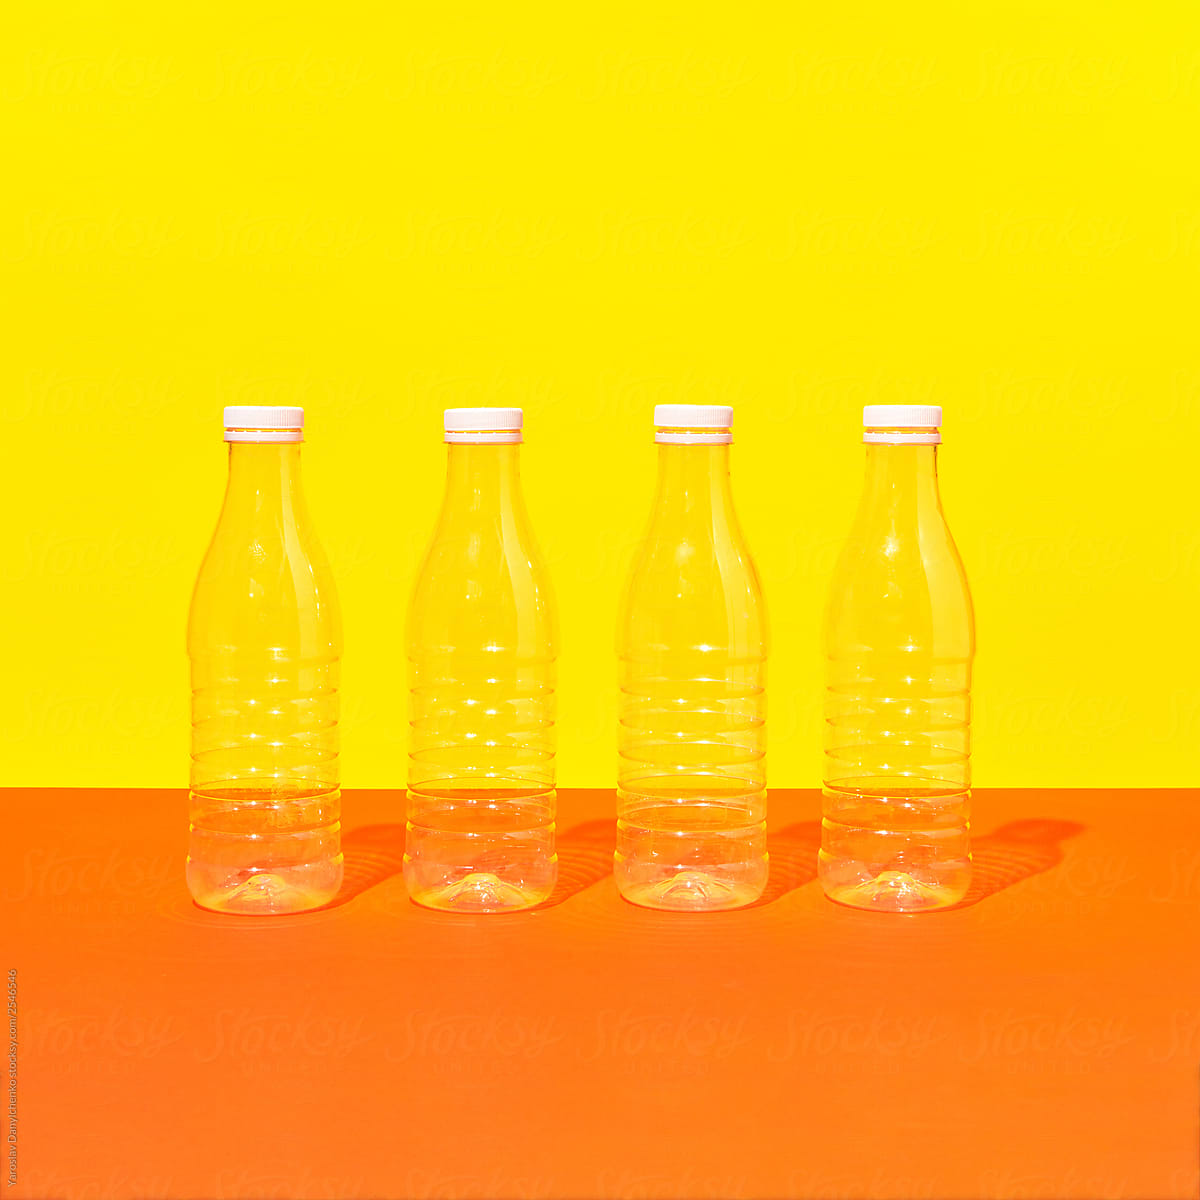 Plastic bottles on a double yellow orange background